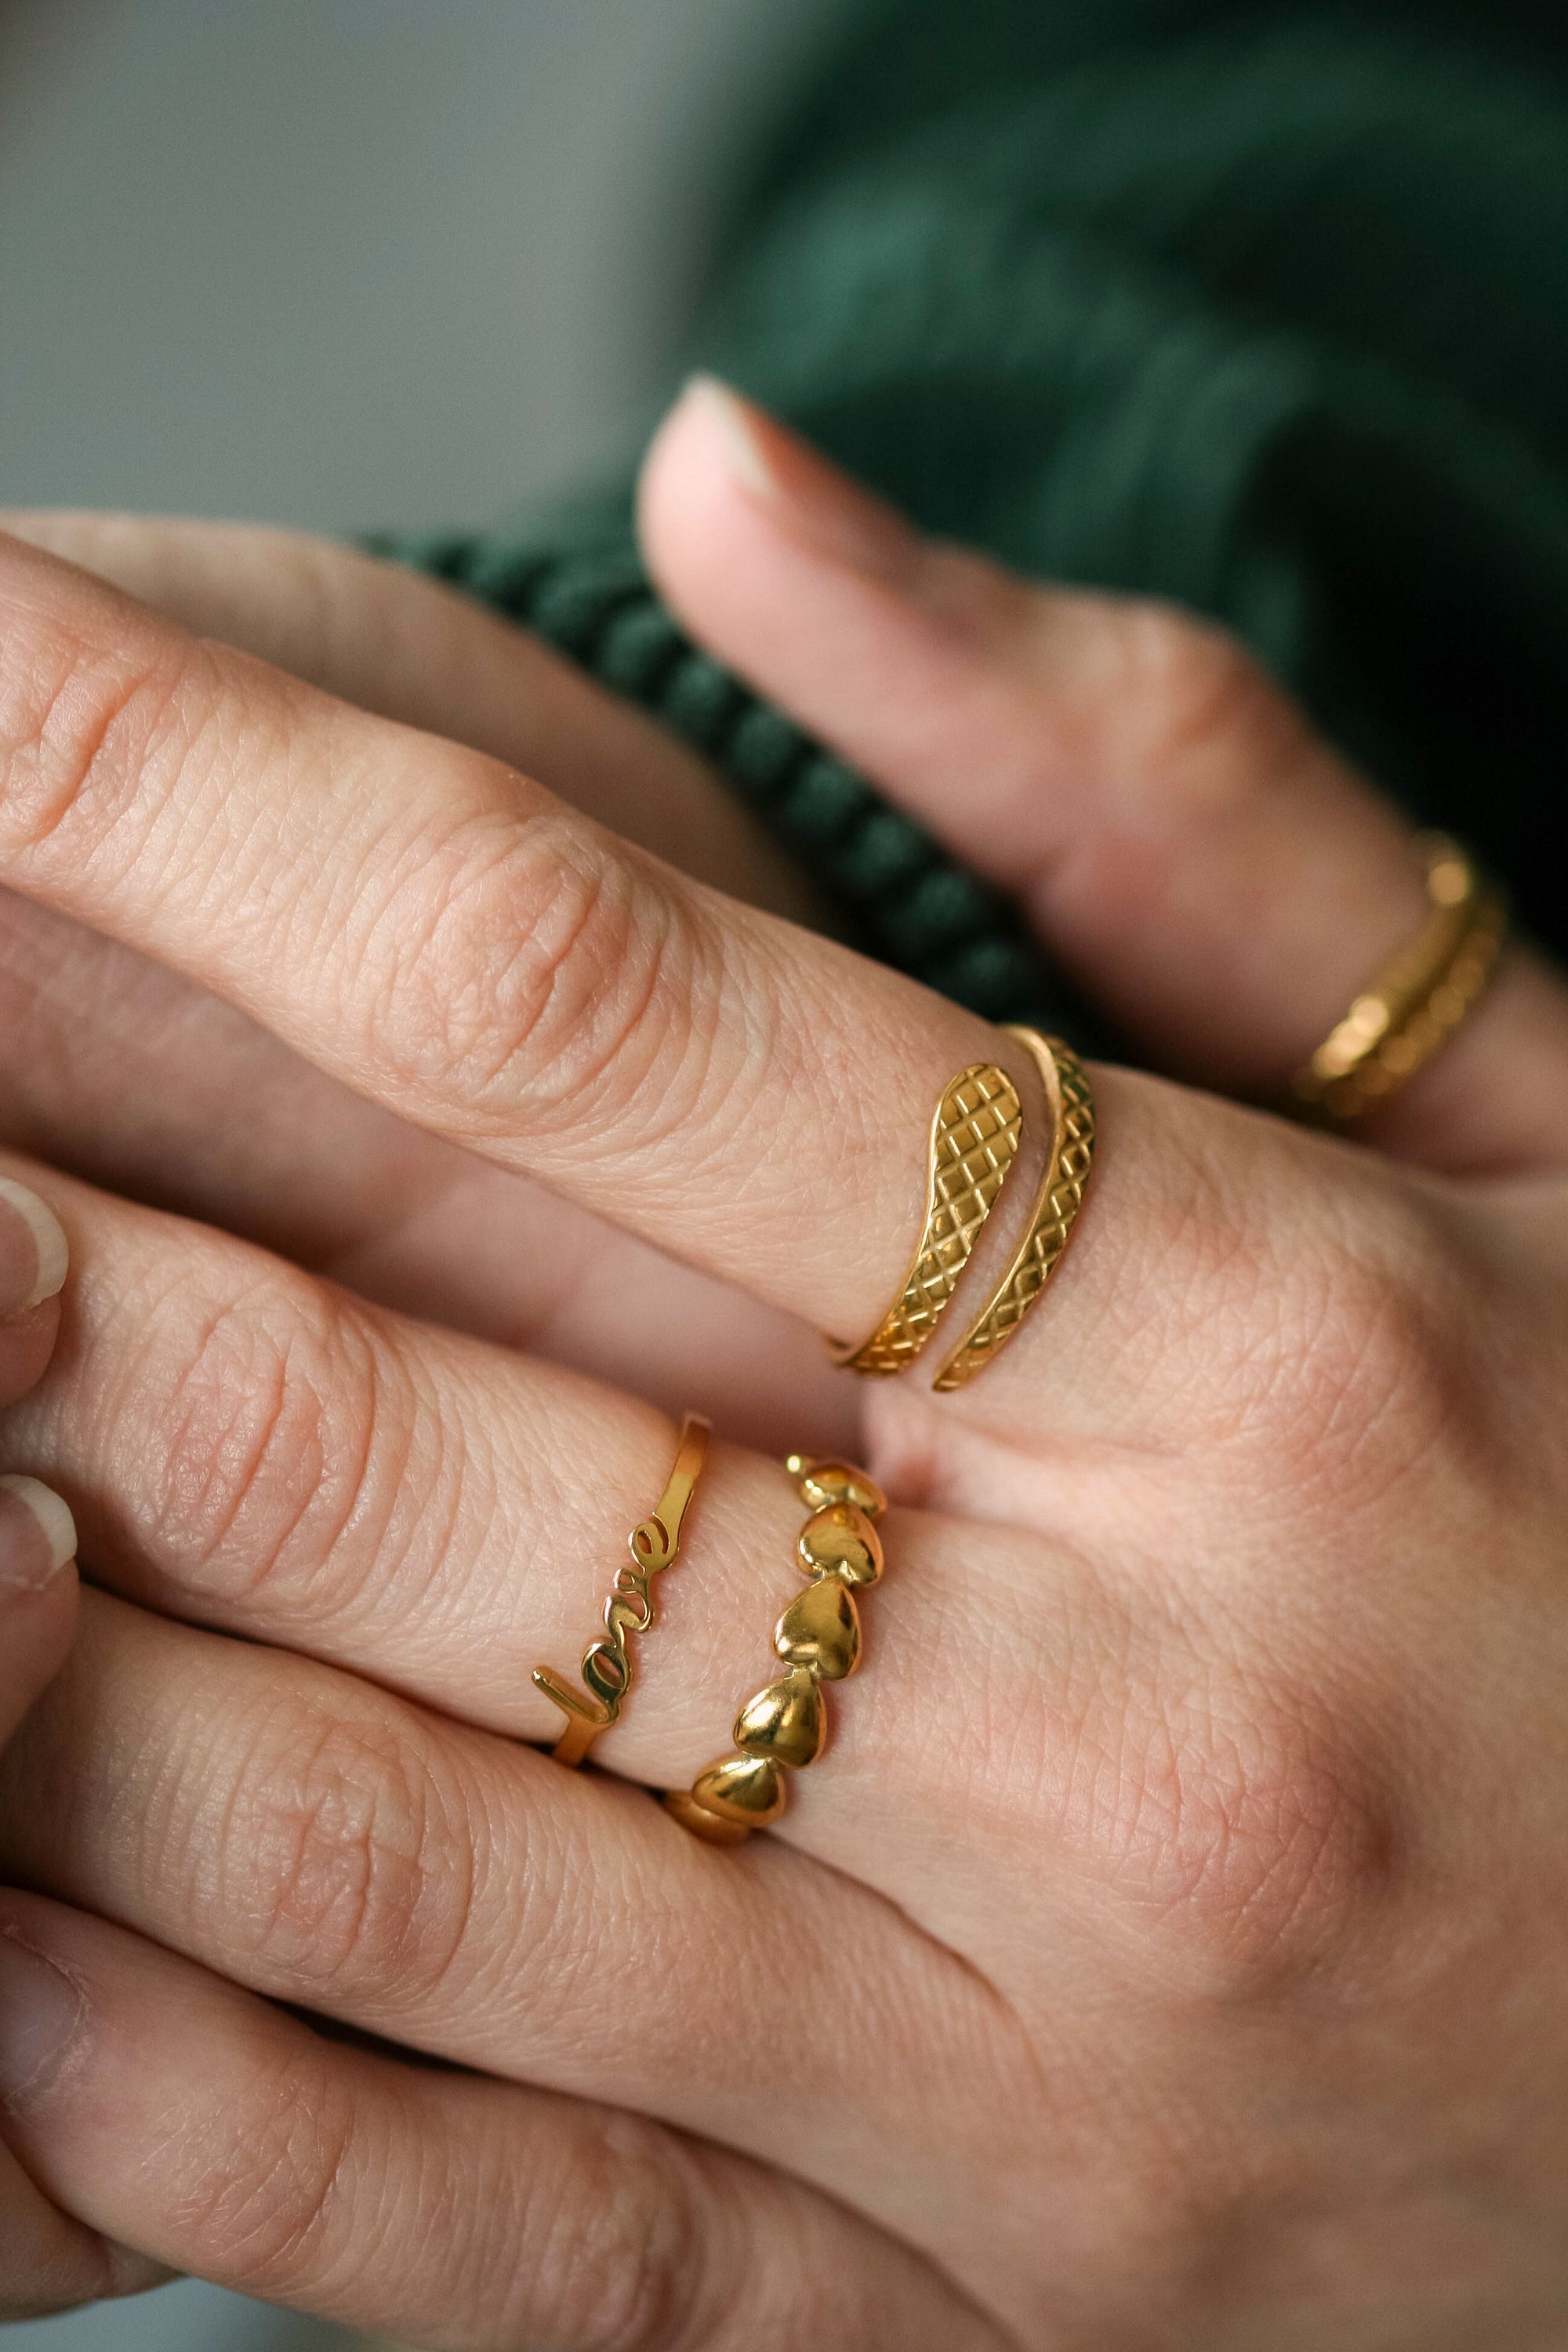 Gold Natrix ring